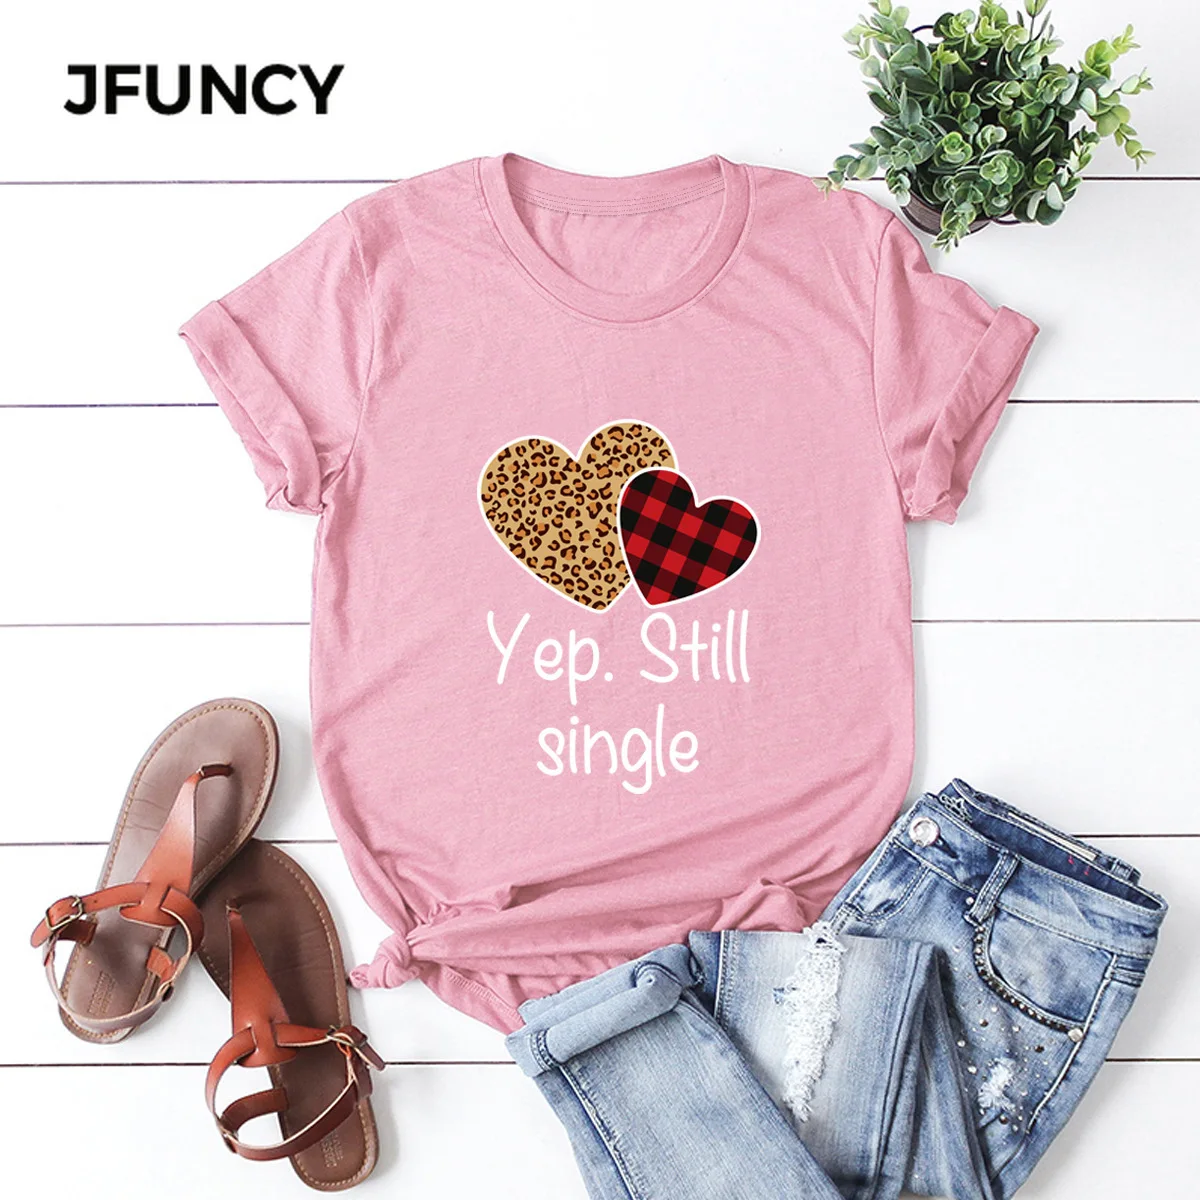 JFUNCY Single Lady Letter Print Summer Cotton T Shirt Women Short Sleeve T-shirt Female Tees  Casual Lady Basic Tops